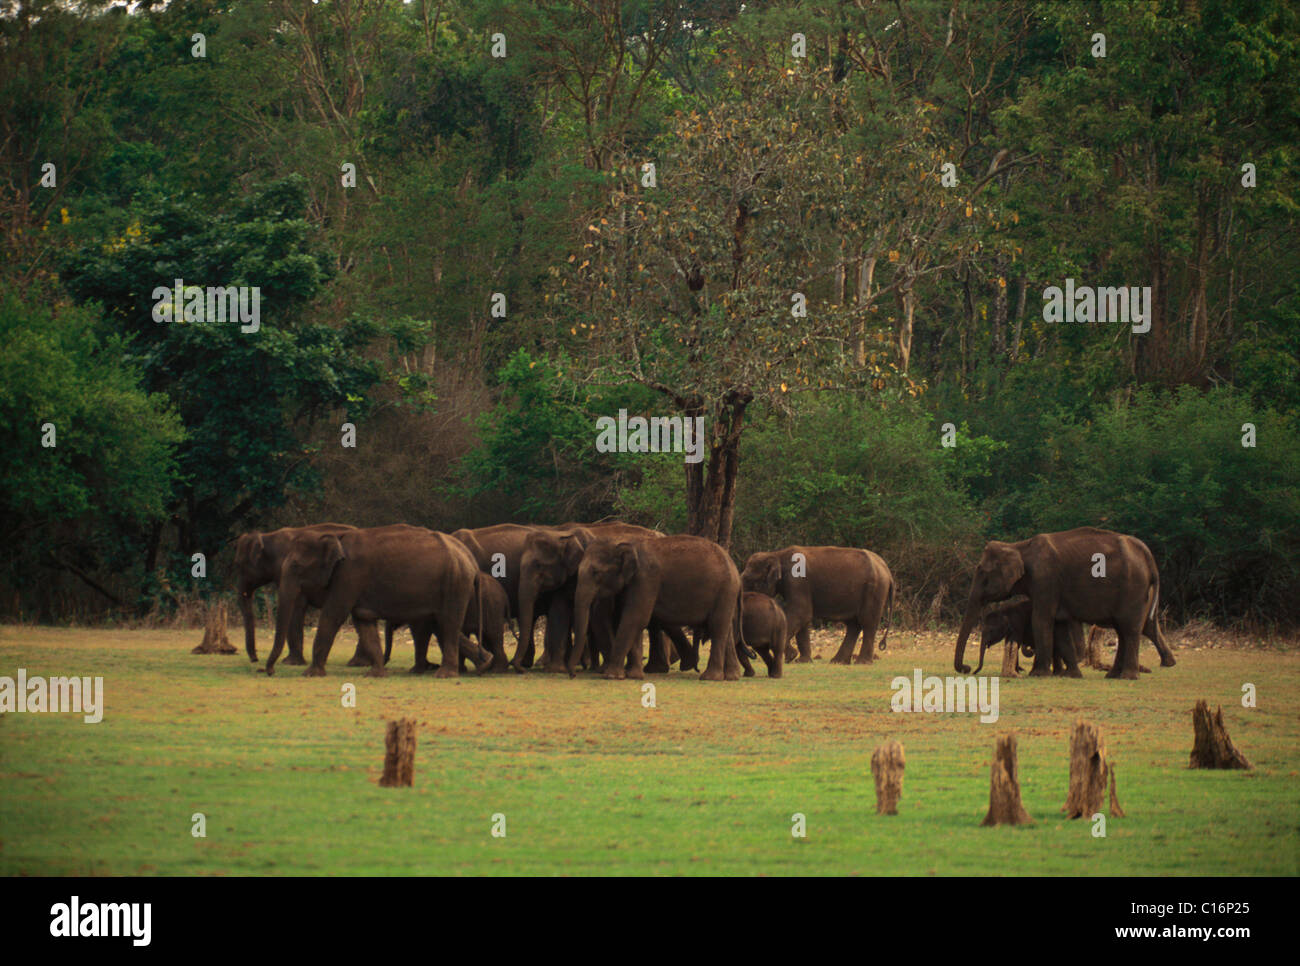 Les éléphants indiens (Elephas maximus indicus) standing in a forest, Bandipur National Park, Chamarajanagar, Karnataka, Inde Banque D'Images